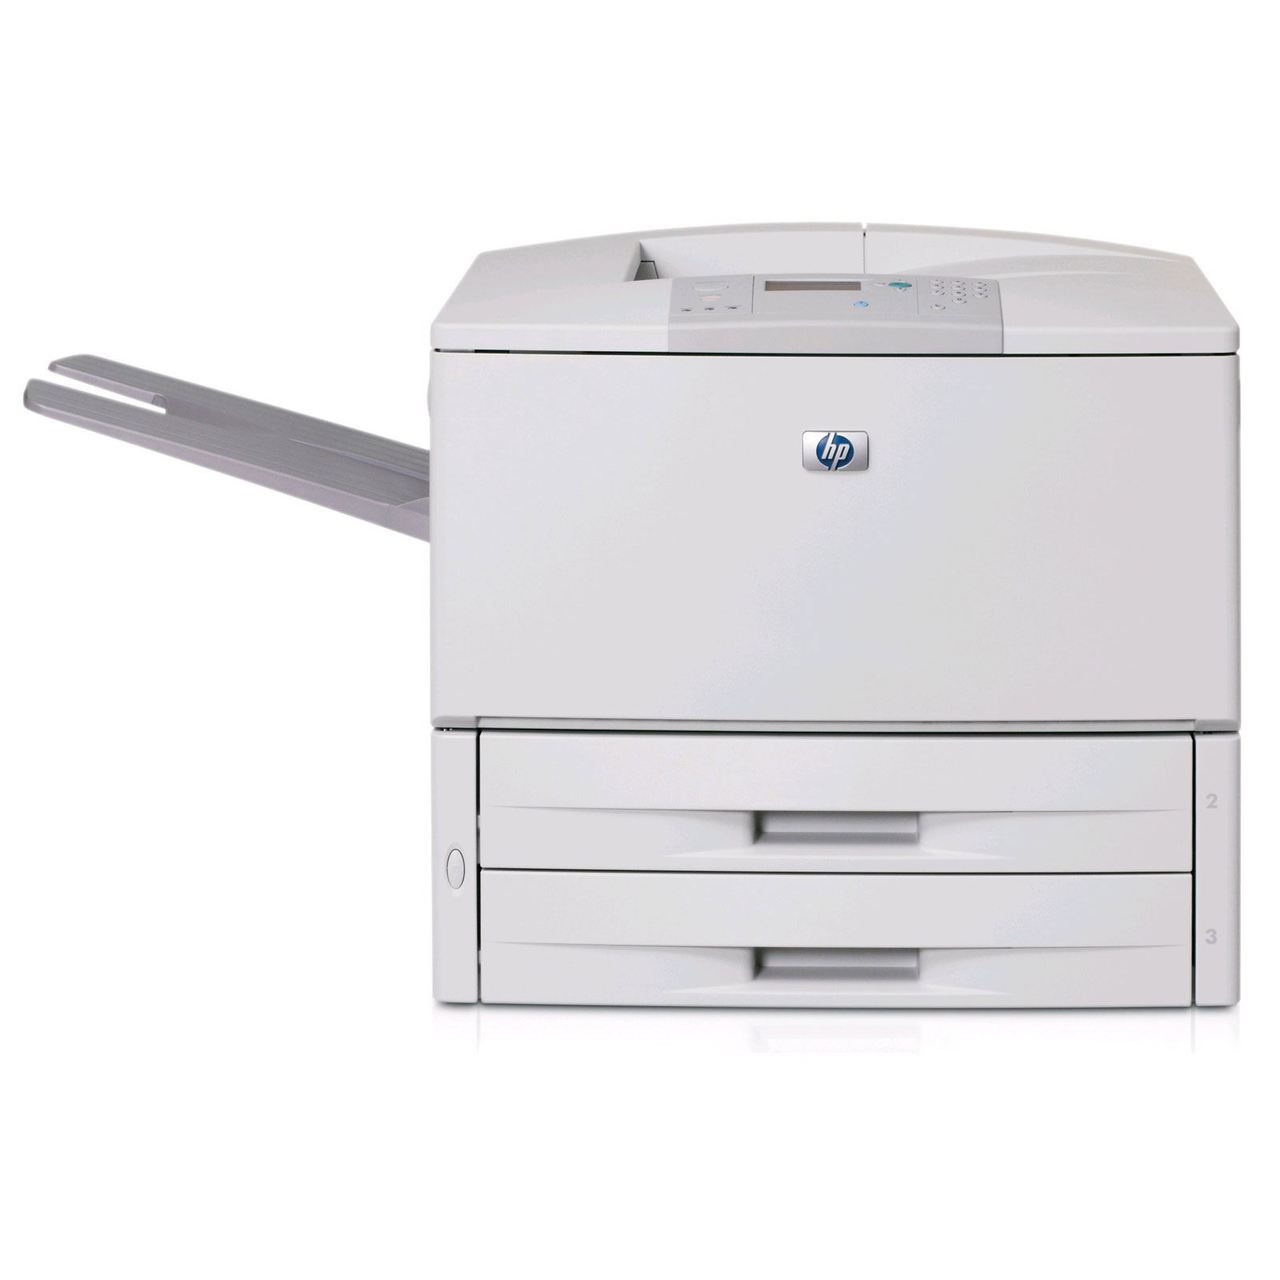 HP LaserJet 9040dtn - Q7699A#ABA - HP 11x17 Laser Printer for sale